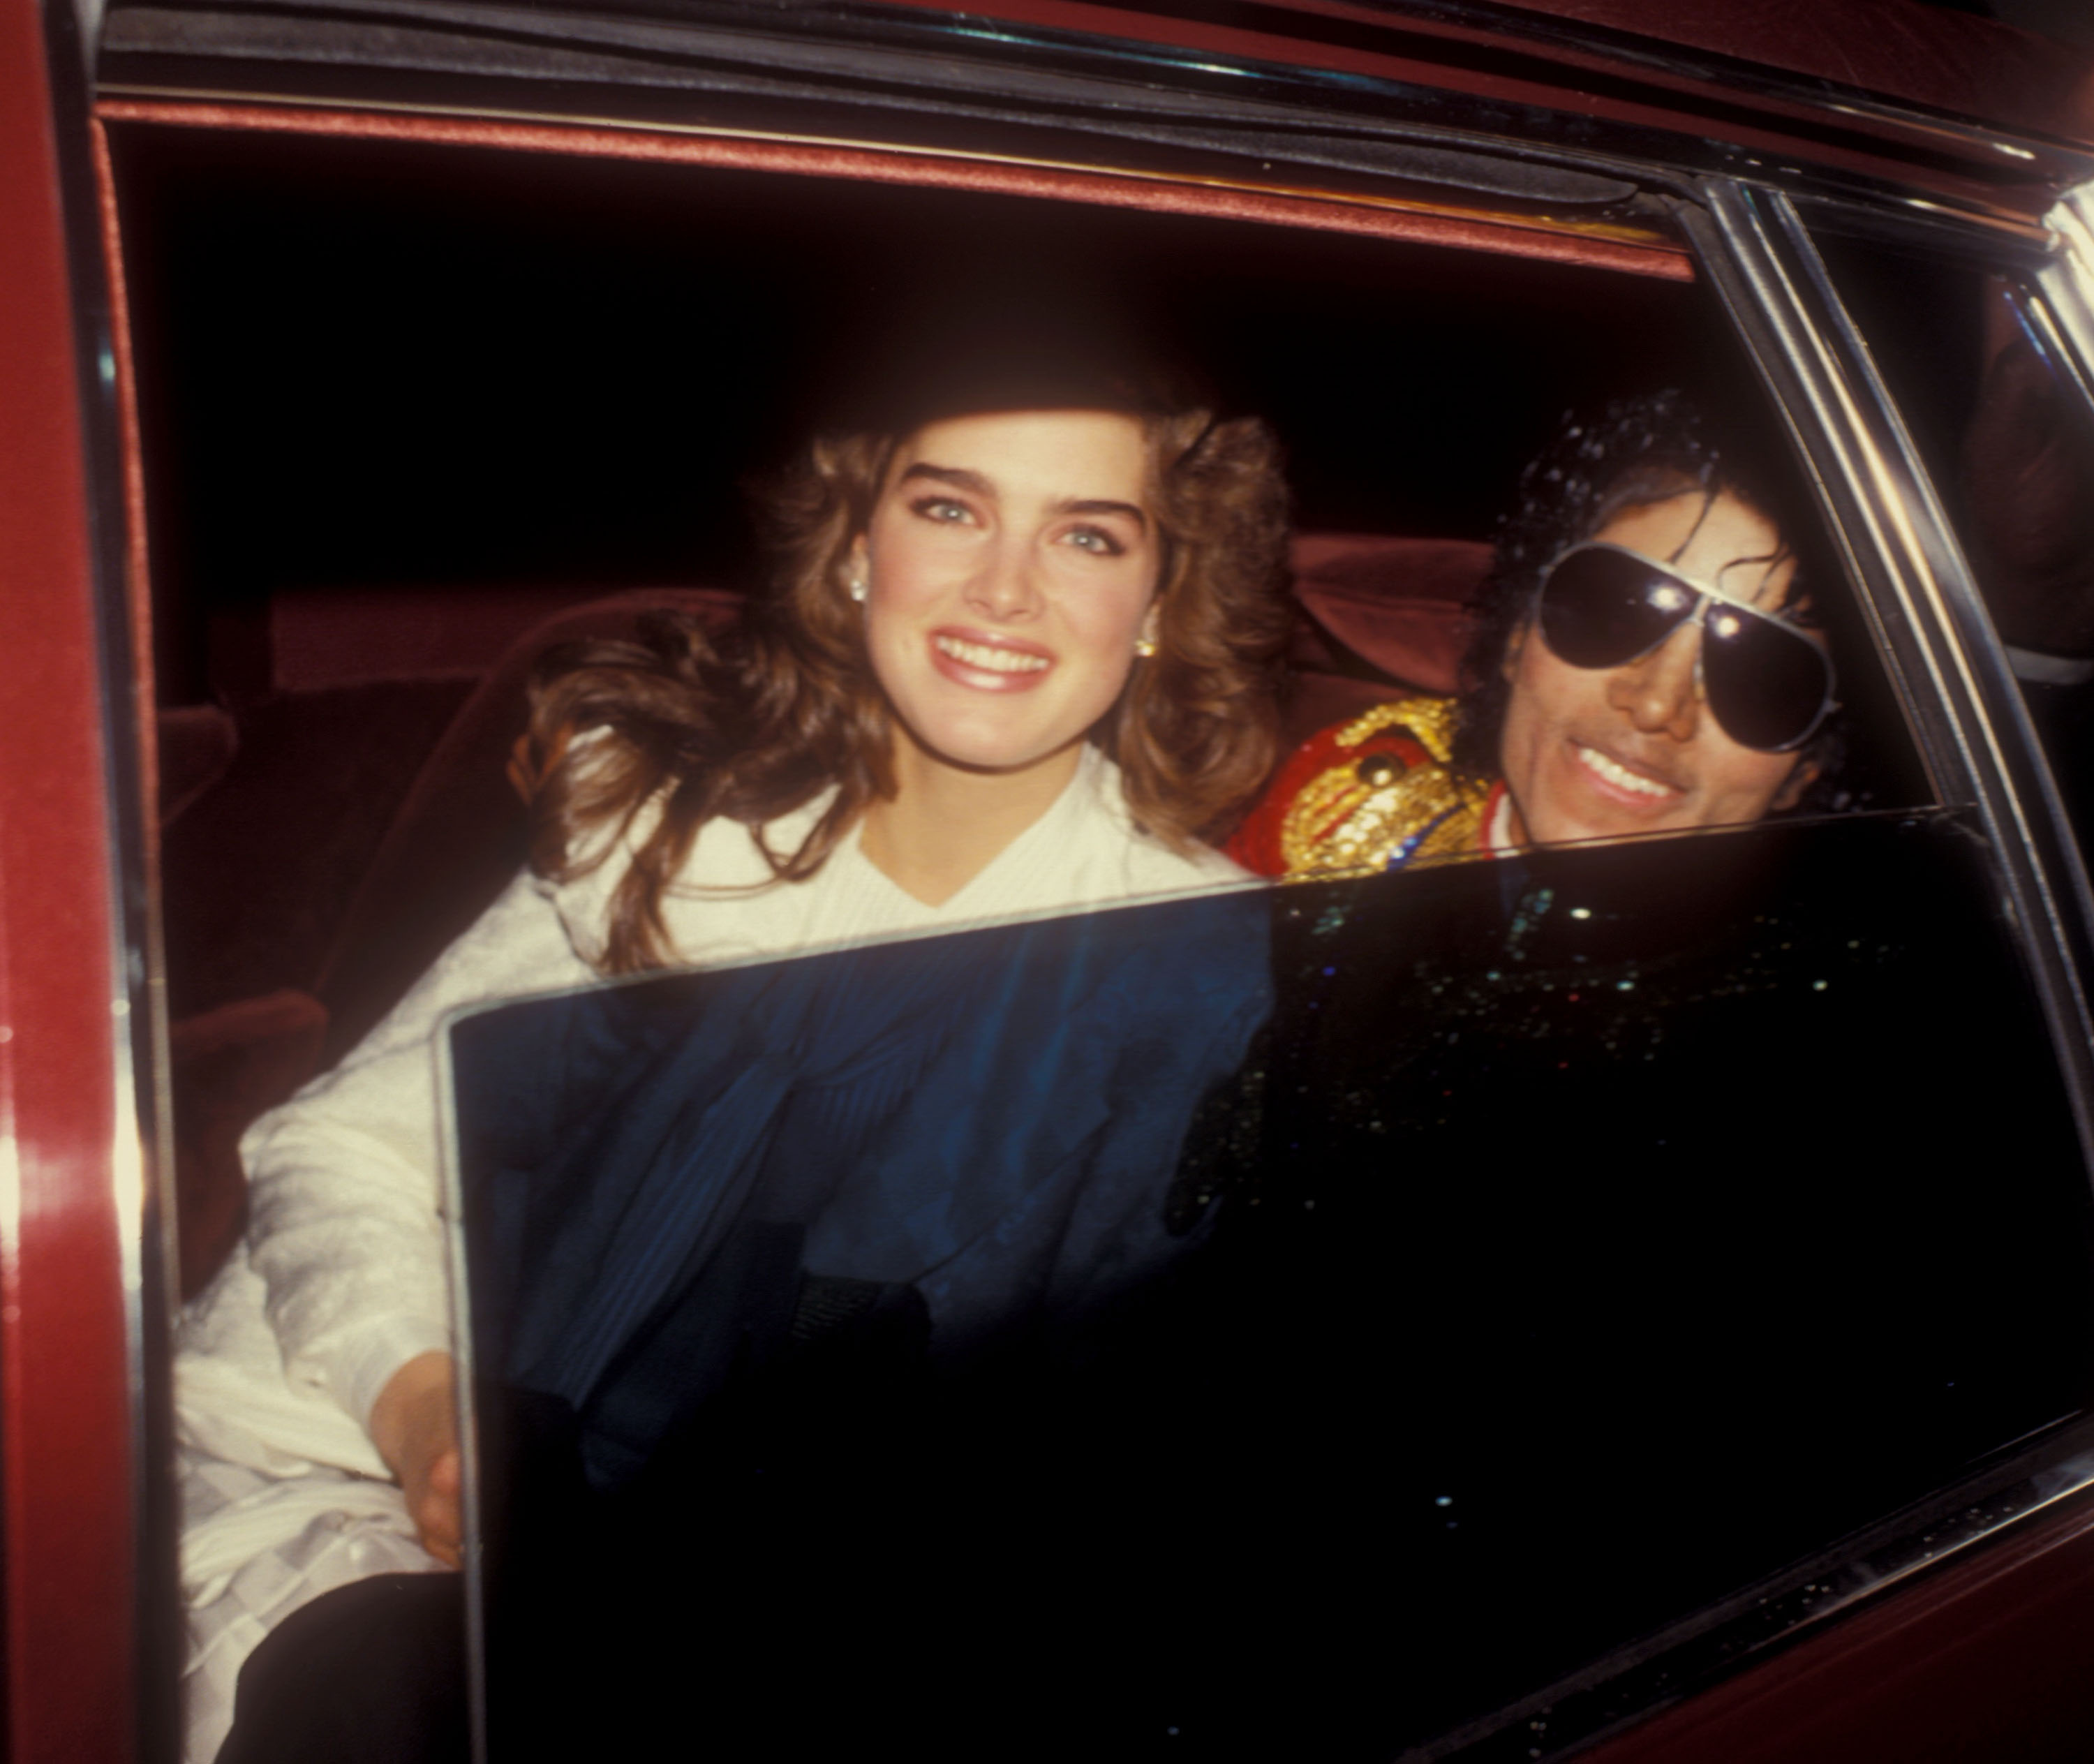 La increíble pareja de Brooke Shields y Michael Jackson, que le propuso matrimonio varias veces (Photo by Barry King/WireImage)